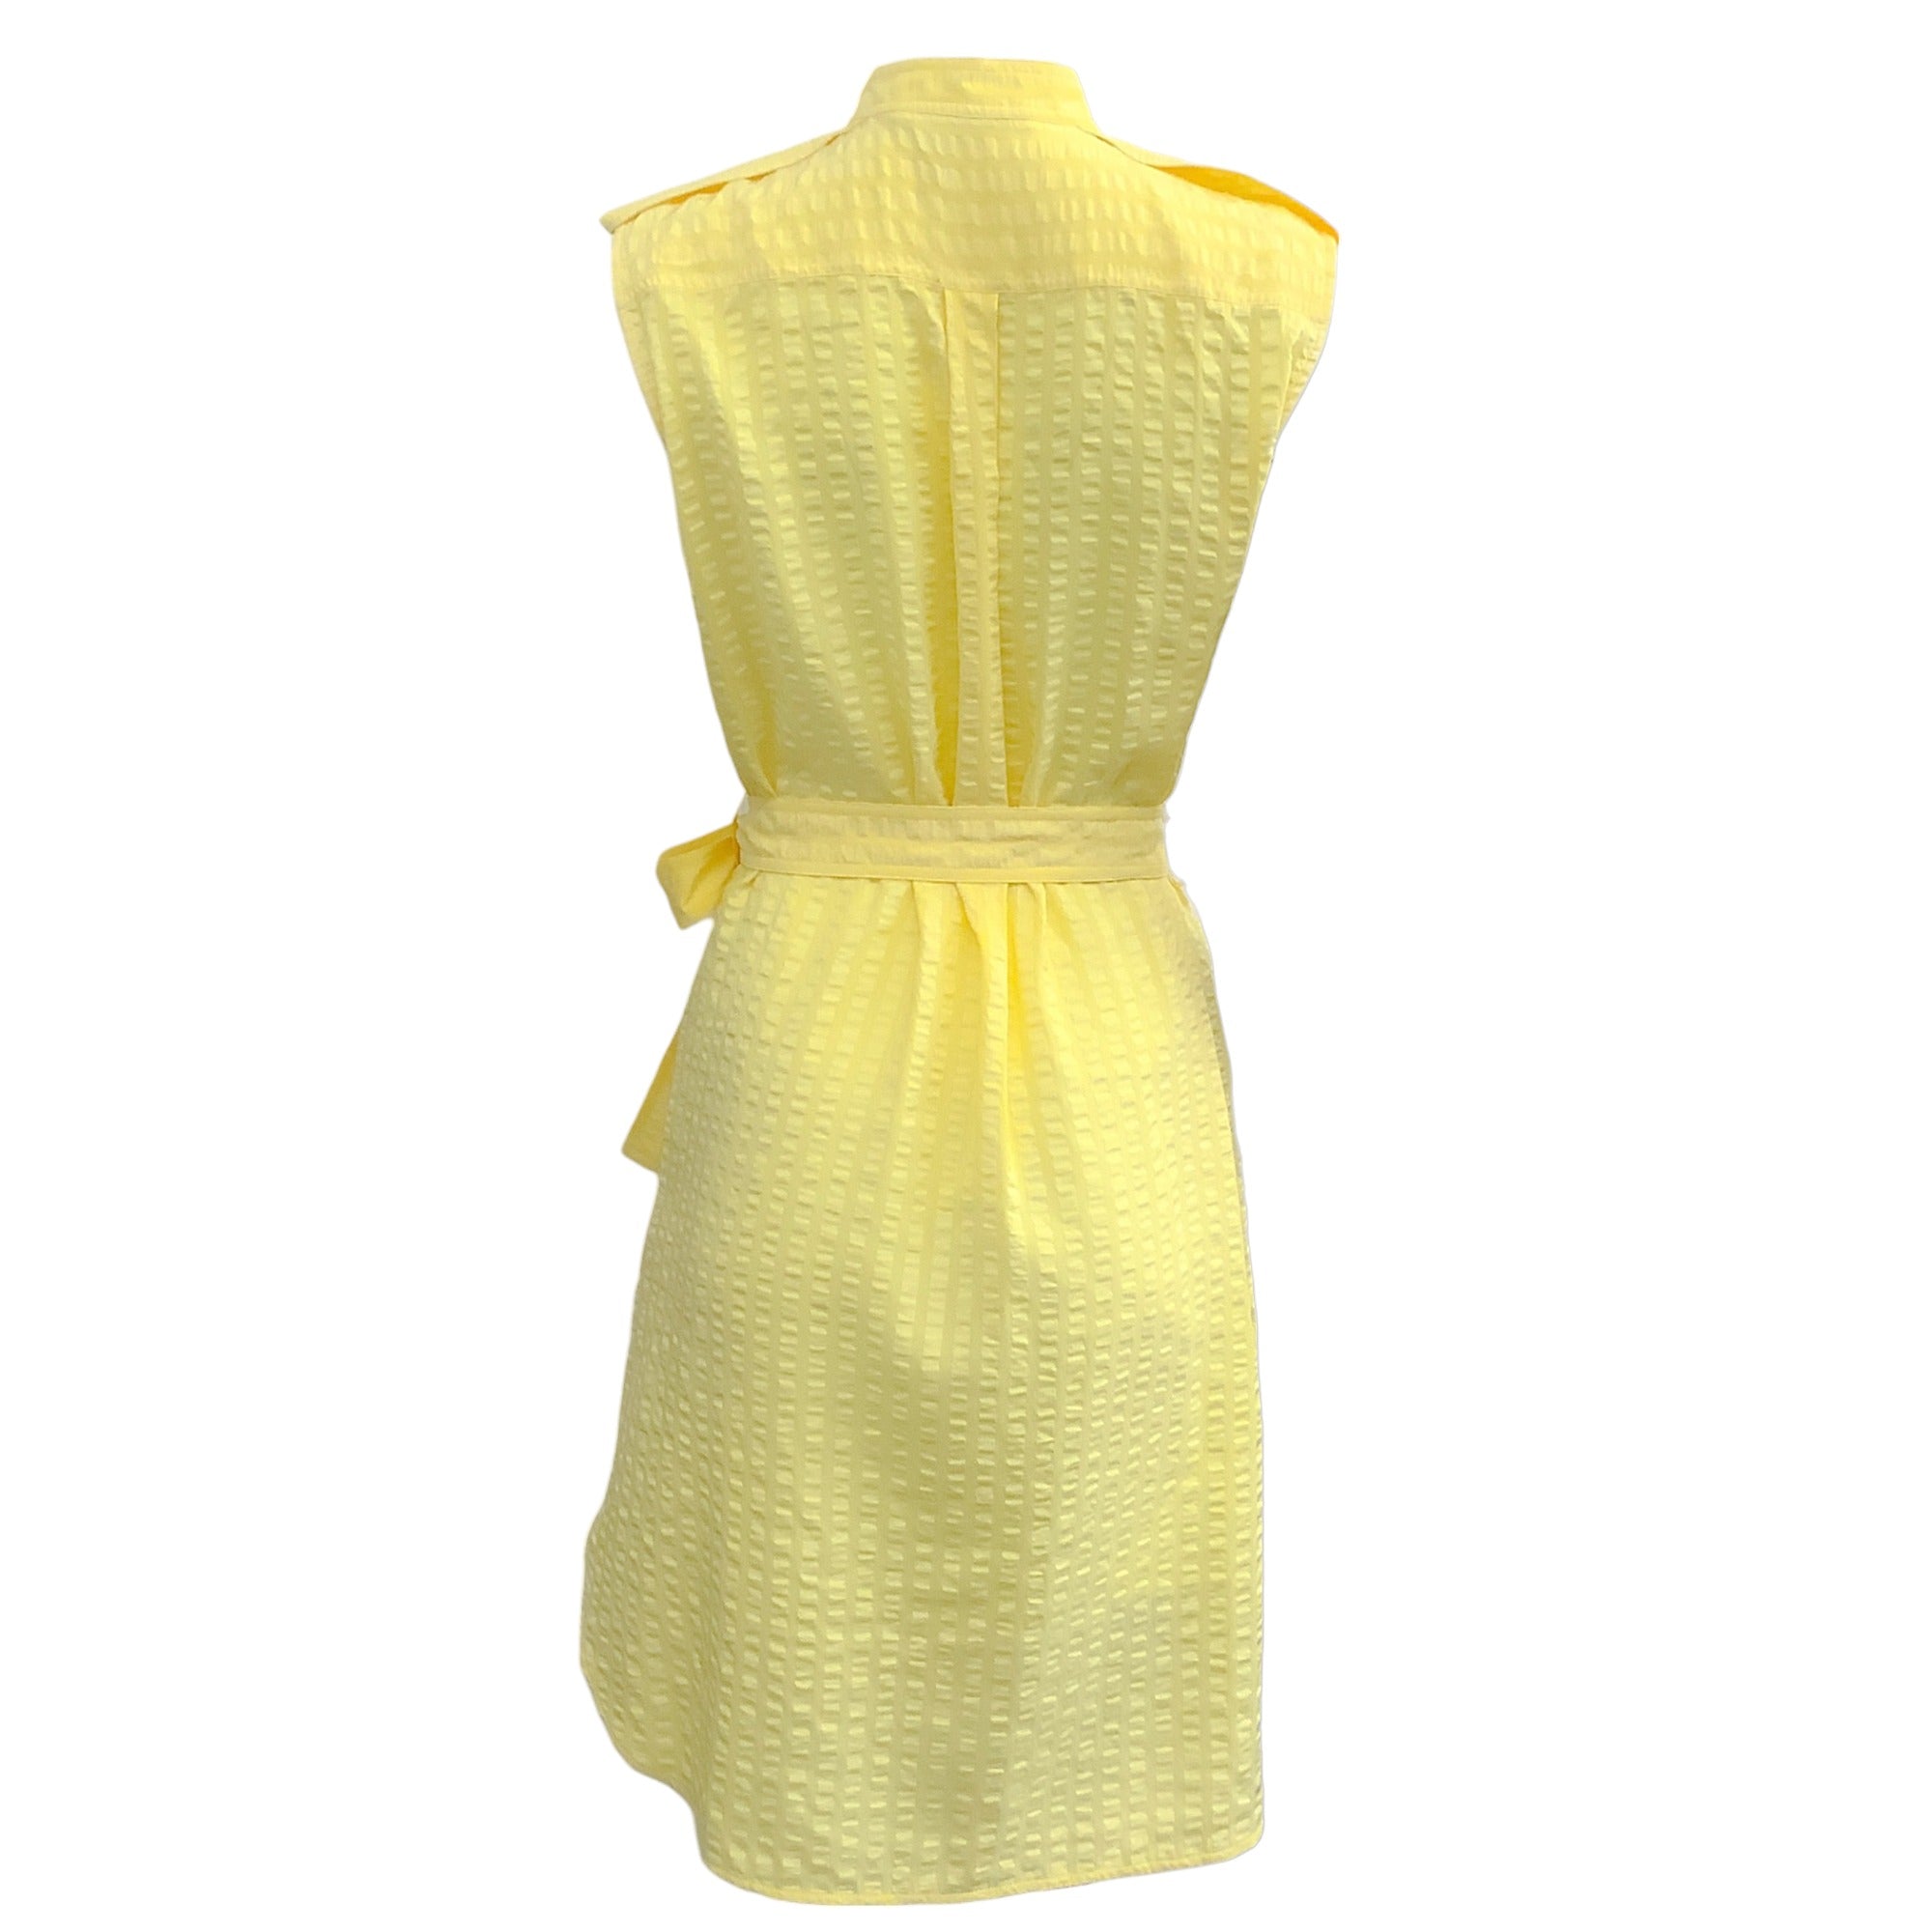 Stella McCartney Yellow Jacquard Sleeveless Dress with Tie Belt